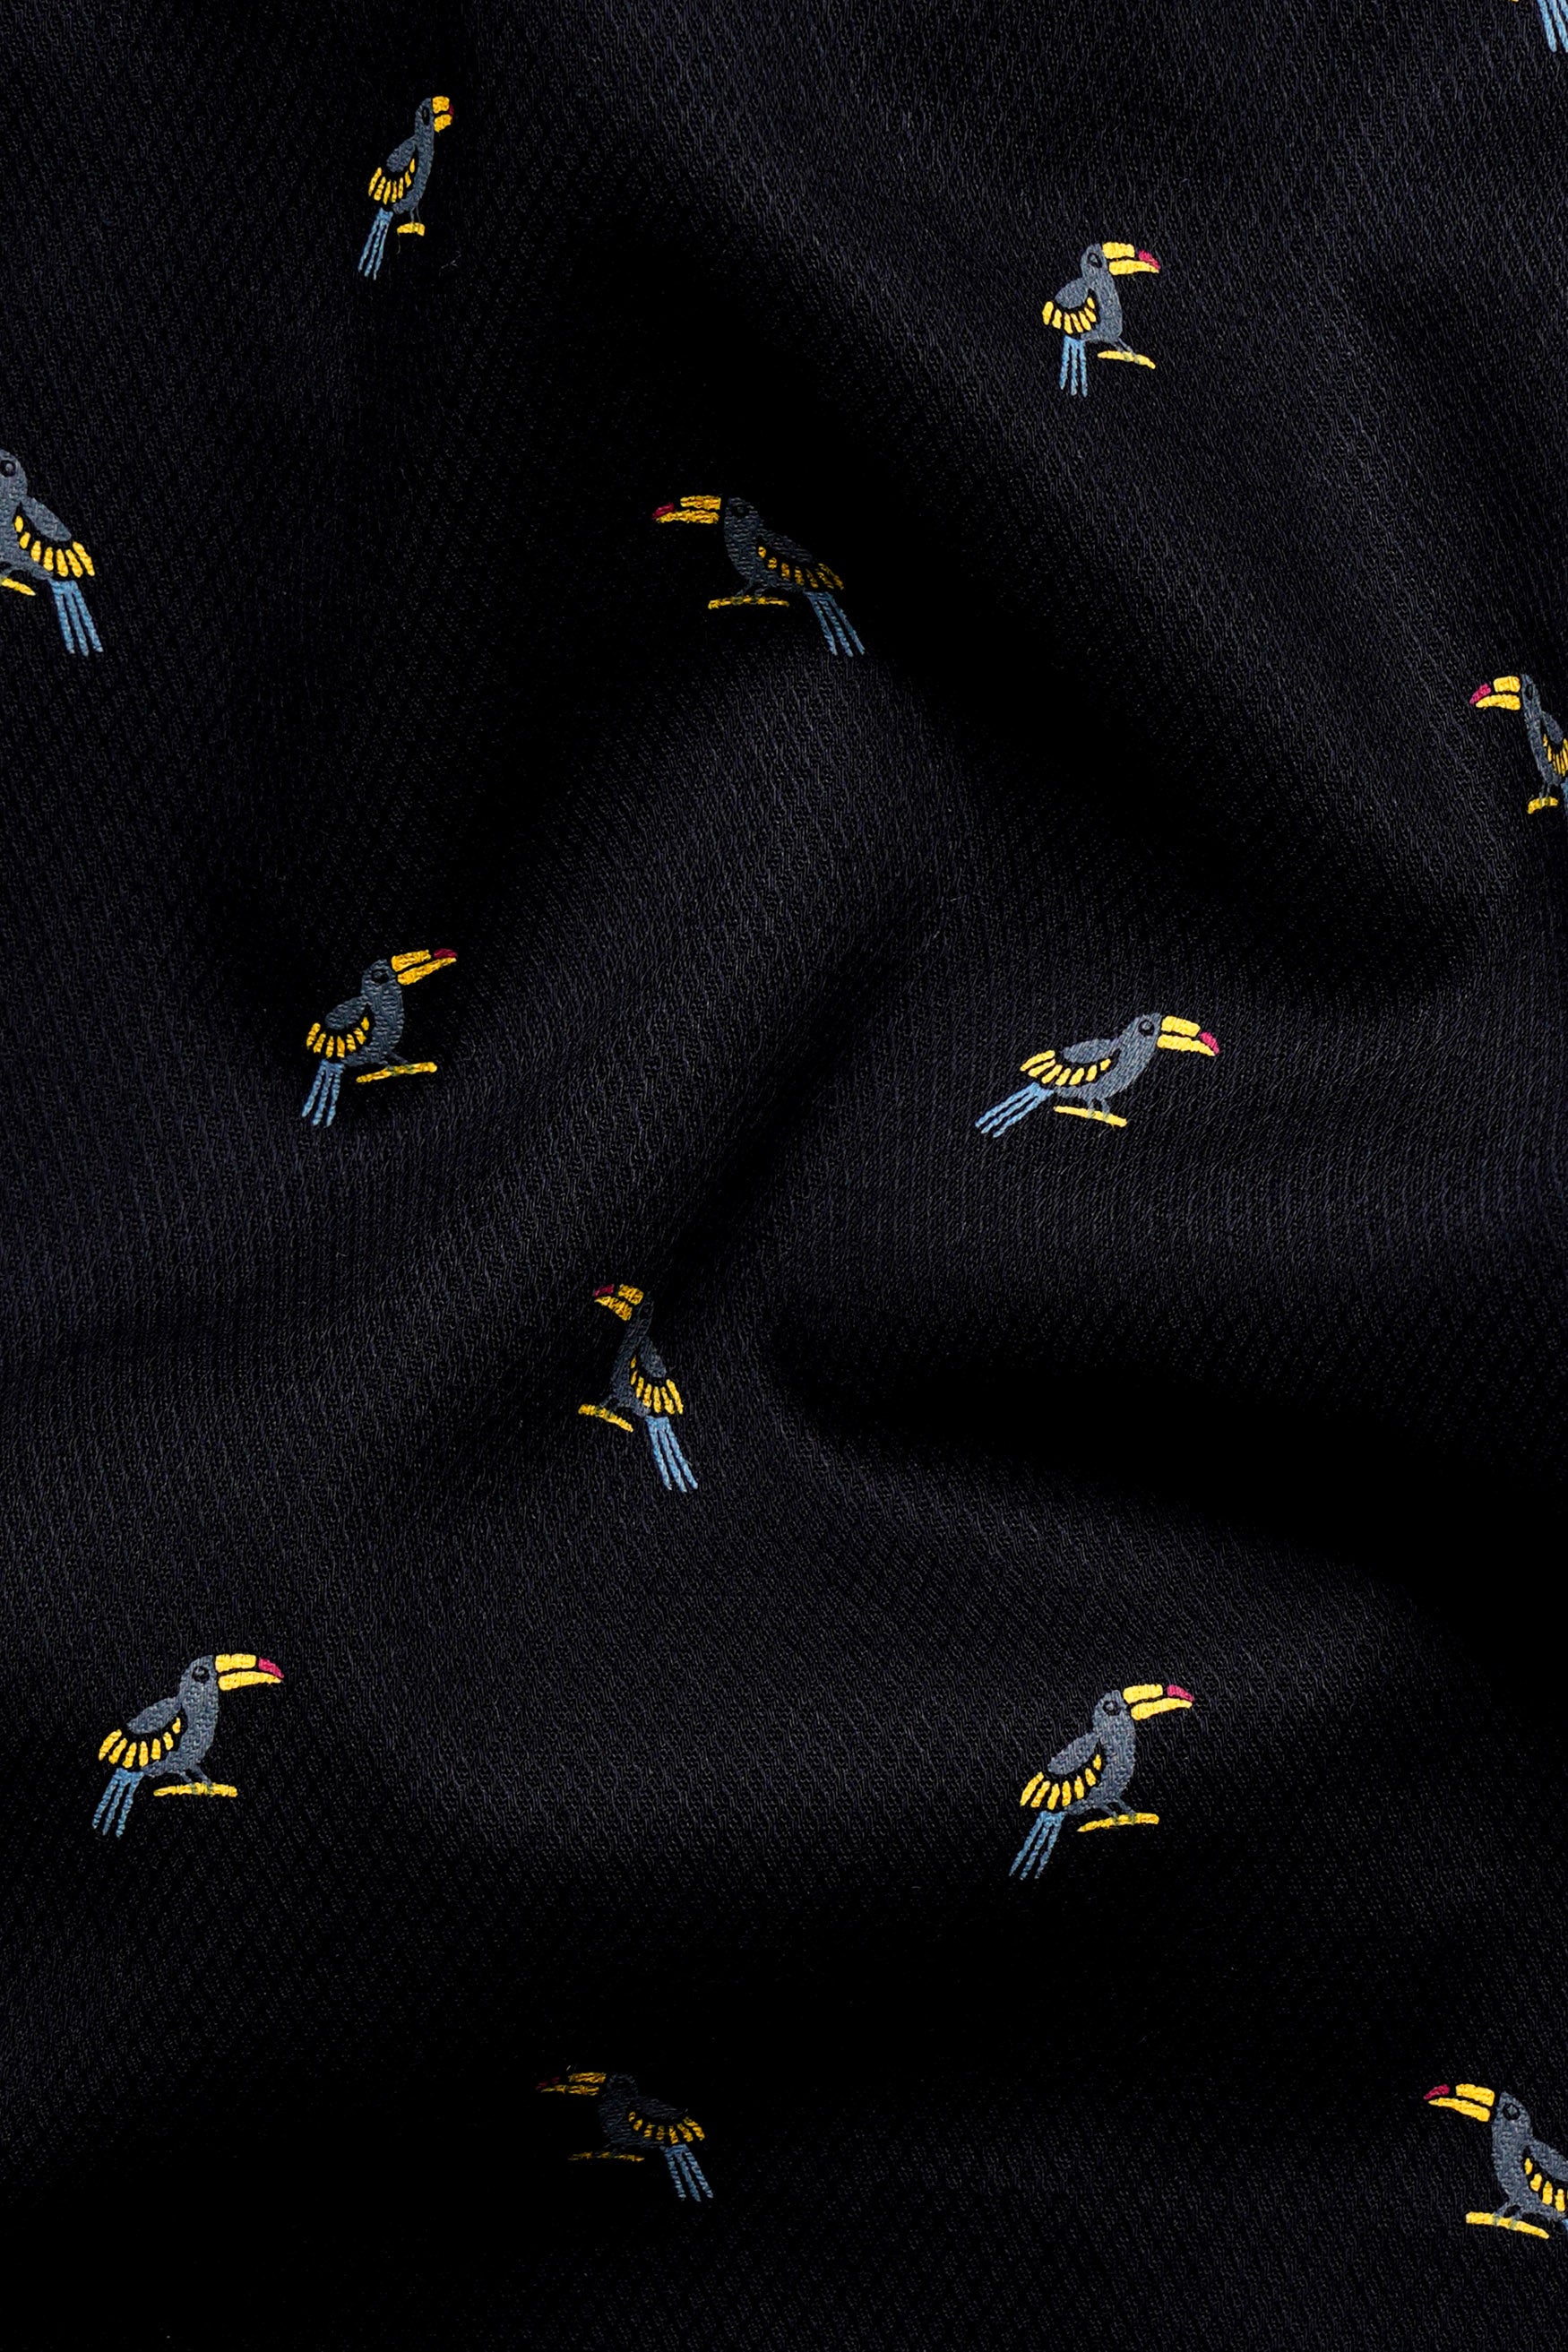 Jade Black Toucans Birds Printed Dobby Textured Premium Giza Cotton Shirt 11668-BLK-38, 11668-BLK-H-38, 11668-BLK-39, 11668-BLK-H-39, 11668-BLK-40, 11668-BLK-H-40, 11668-BLK-42, 11668-BLK-H-42, 11668-BLK-44, 11668-BLK-H-44, 11668-BLK-46, 11668-BLK-H-46, 11668-BLK-48, 11668-BLK-H-48, 11668-BLK-50, 11668-BLK-H-50, 11668-BLK-52, 11668-BLK-H-52